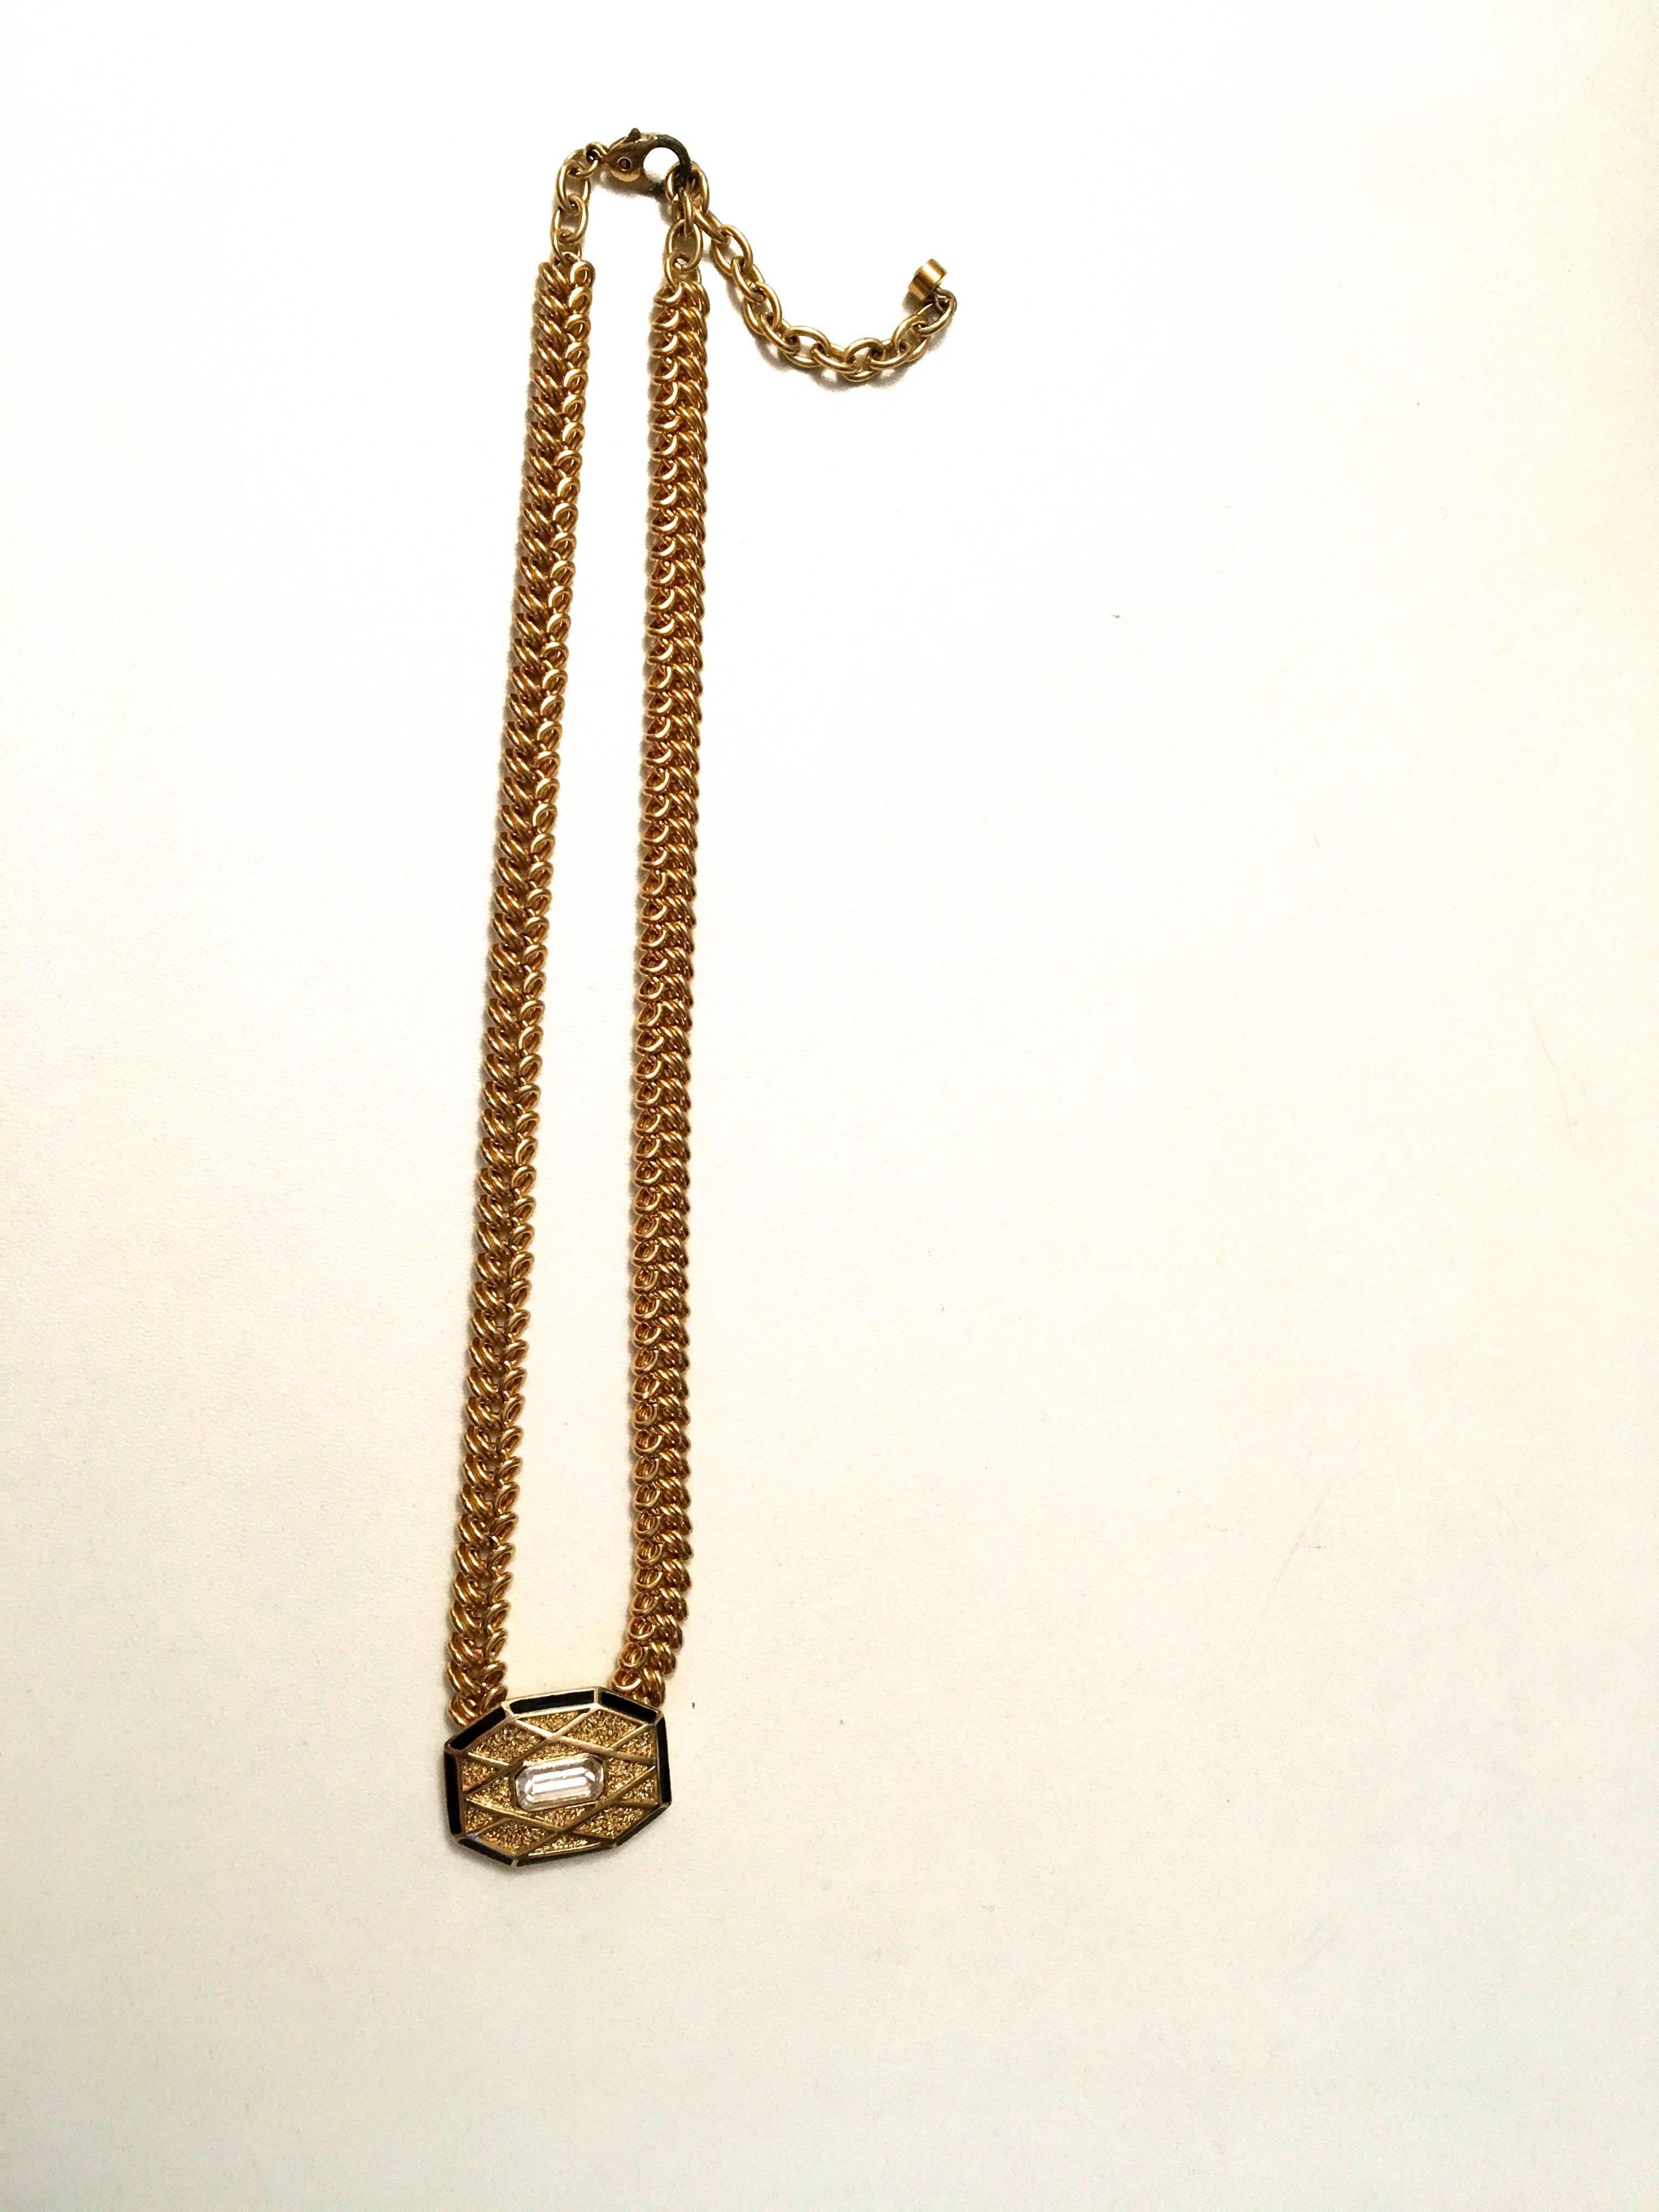 Balenciaga Necklace -Gold Tone Metal w/ Pendant - 1980s For Sale 2